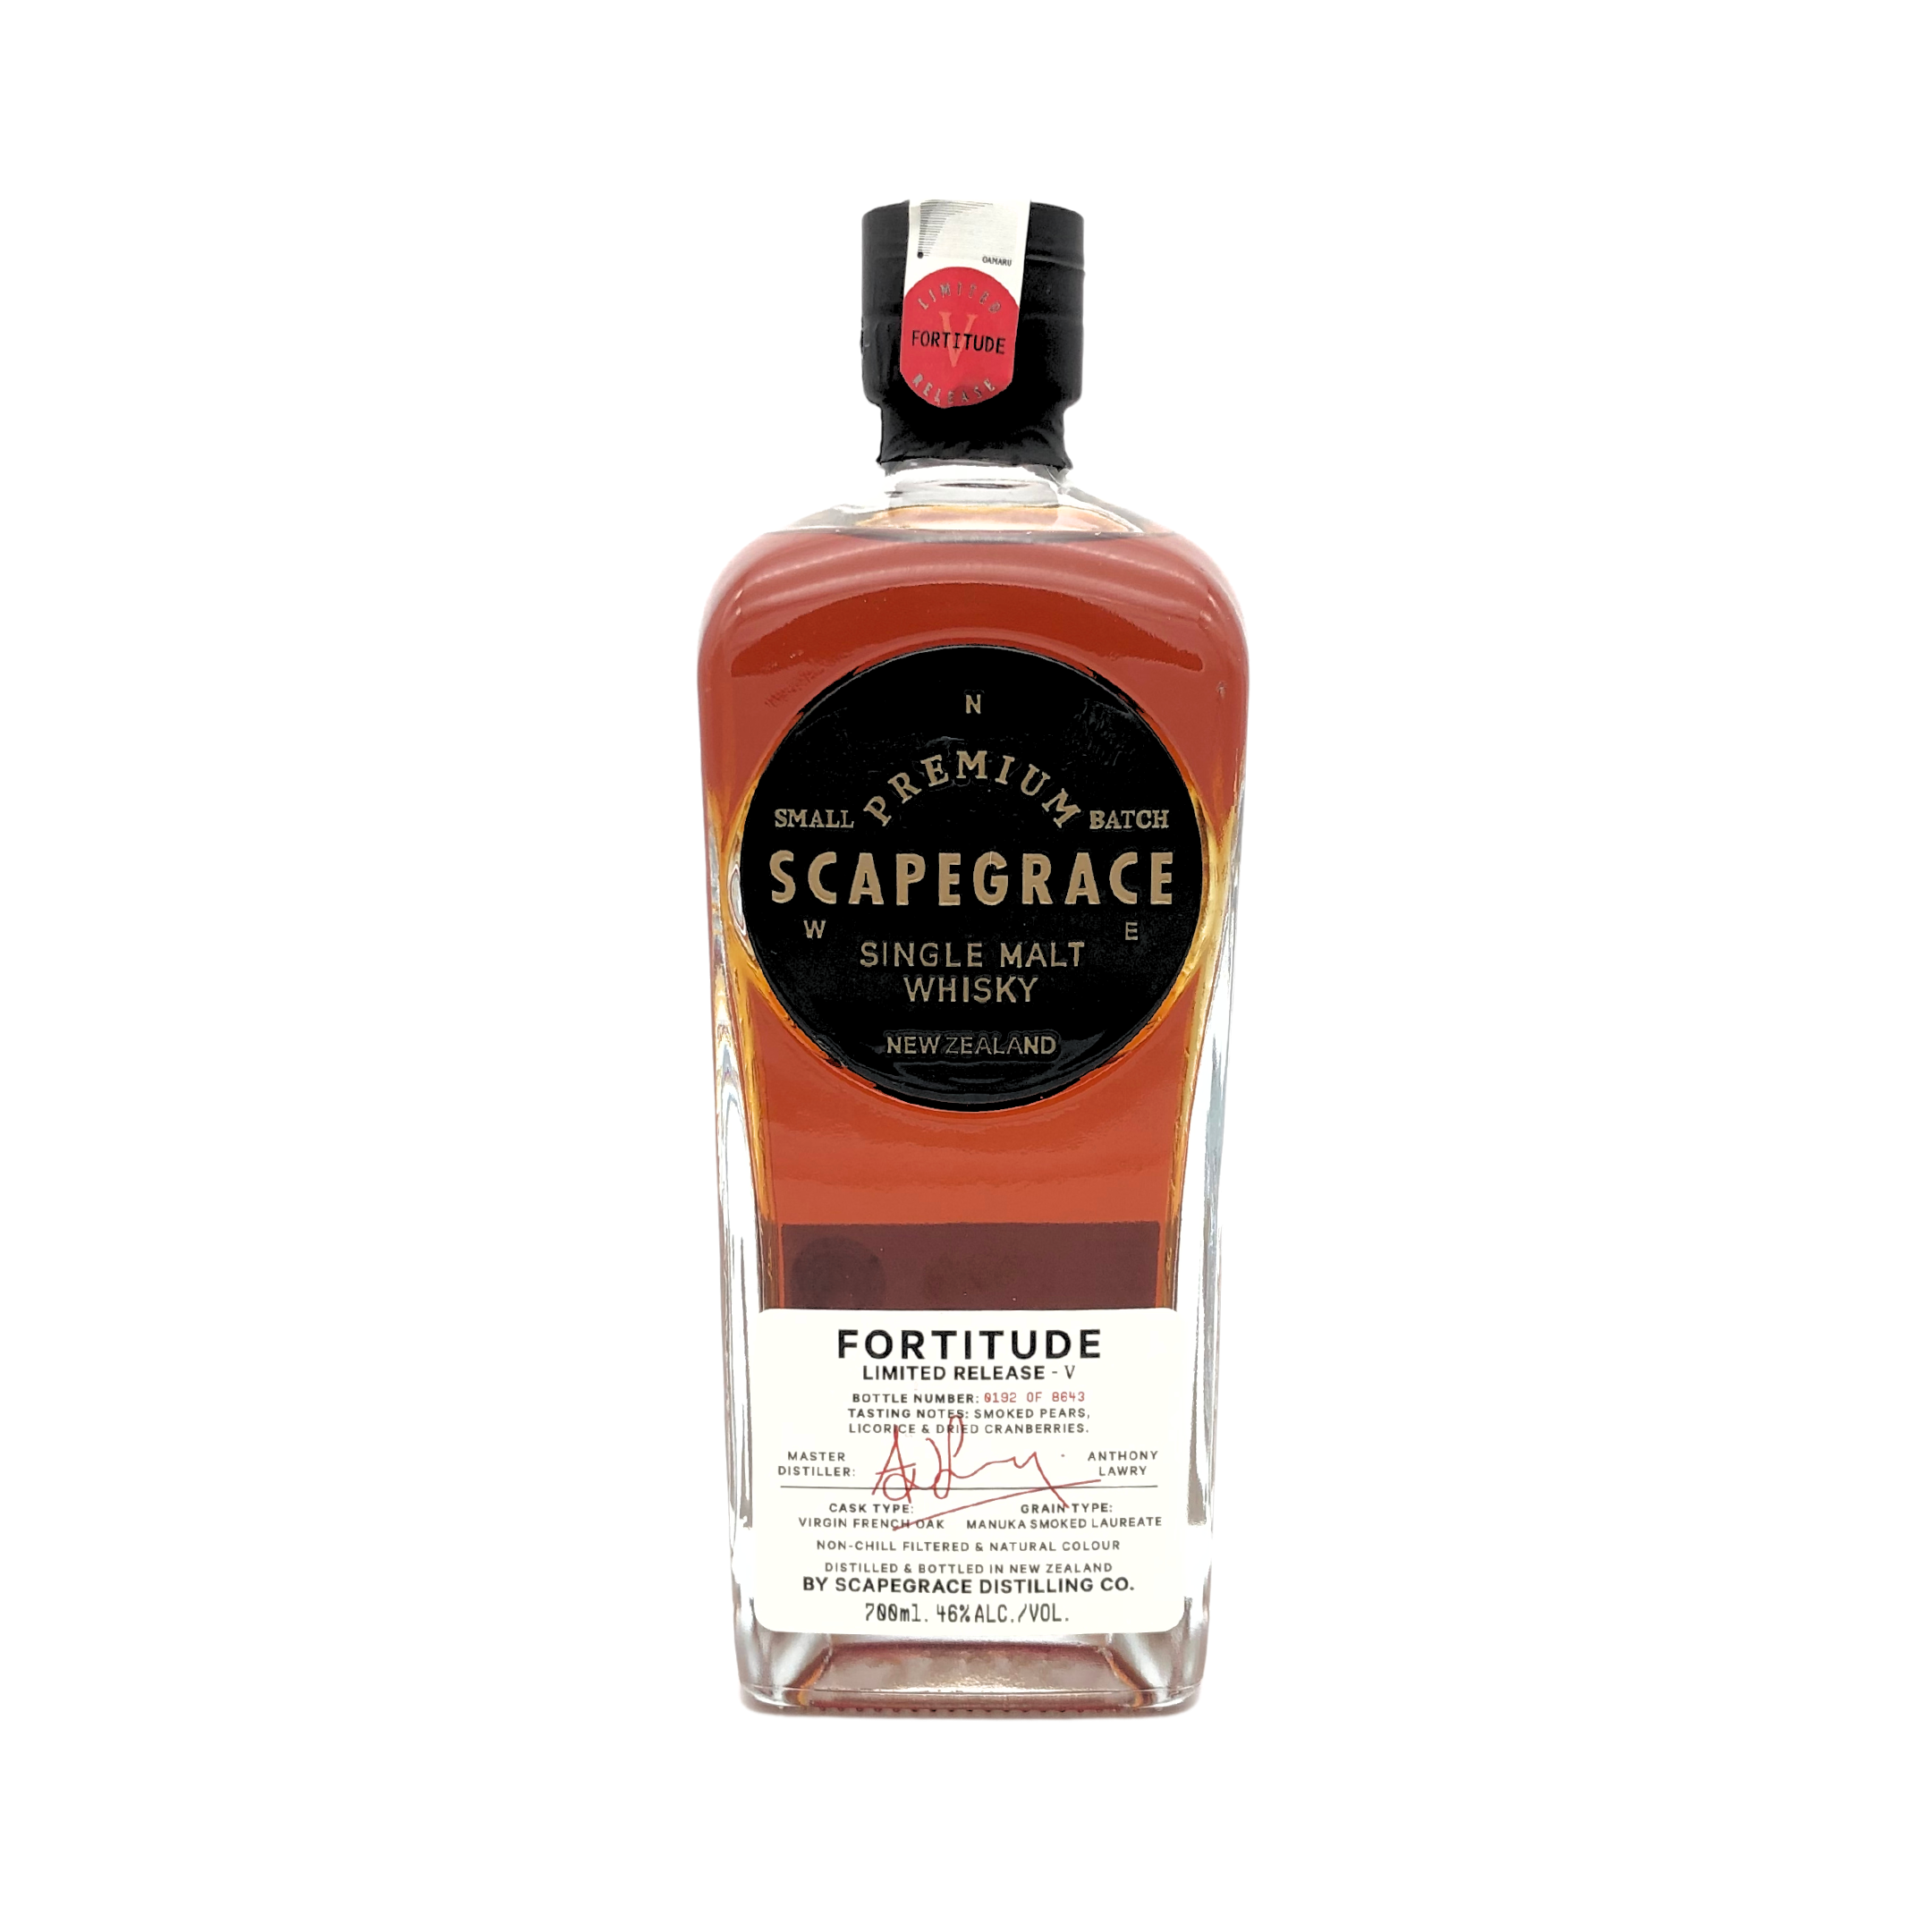 SCAPEGRACE - Fortitude Single Malt Whisky